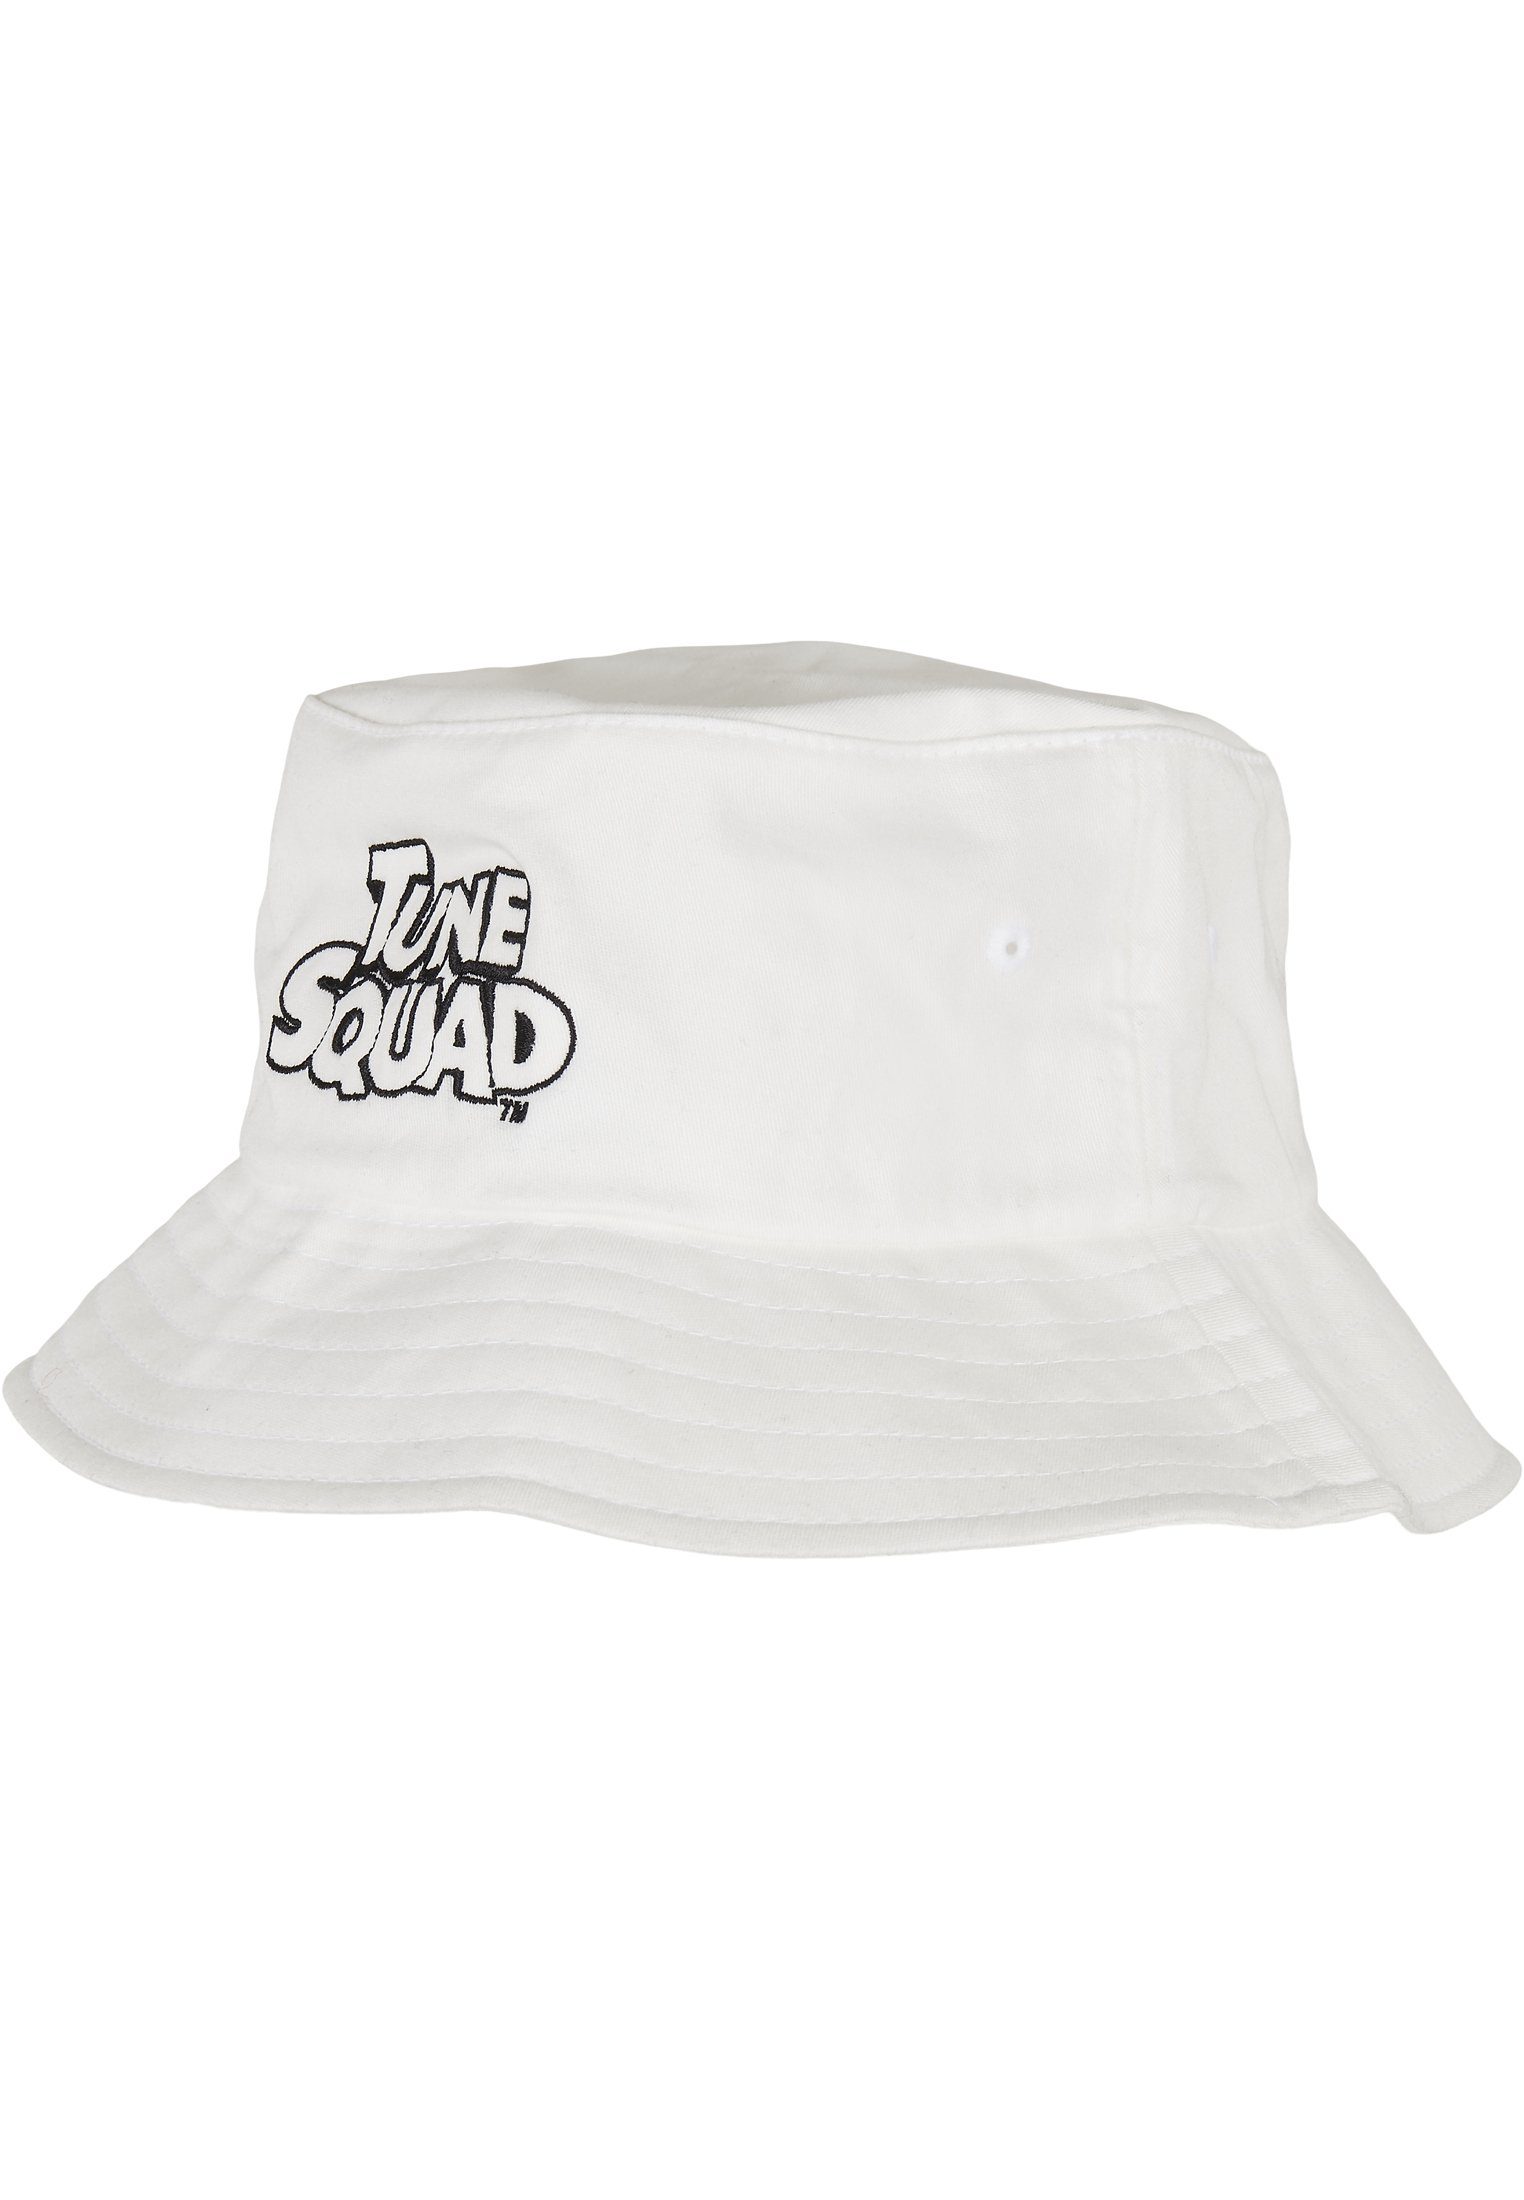 Hat Squad Wording Bucket Cap MisterTee Tune Bucket Hat Flex